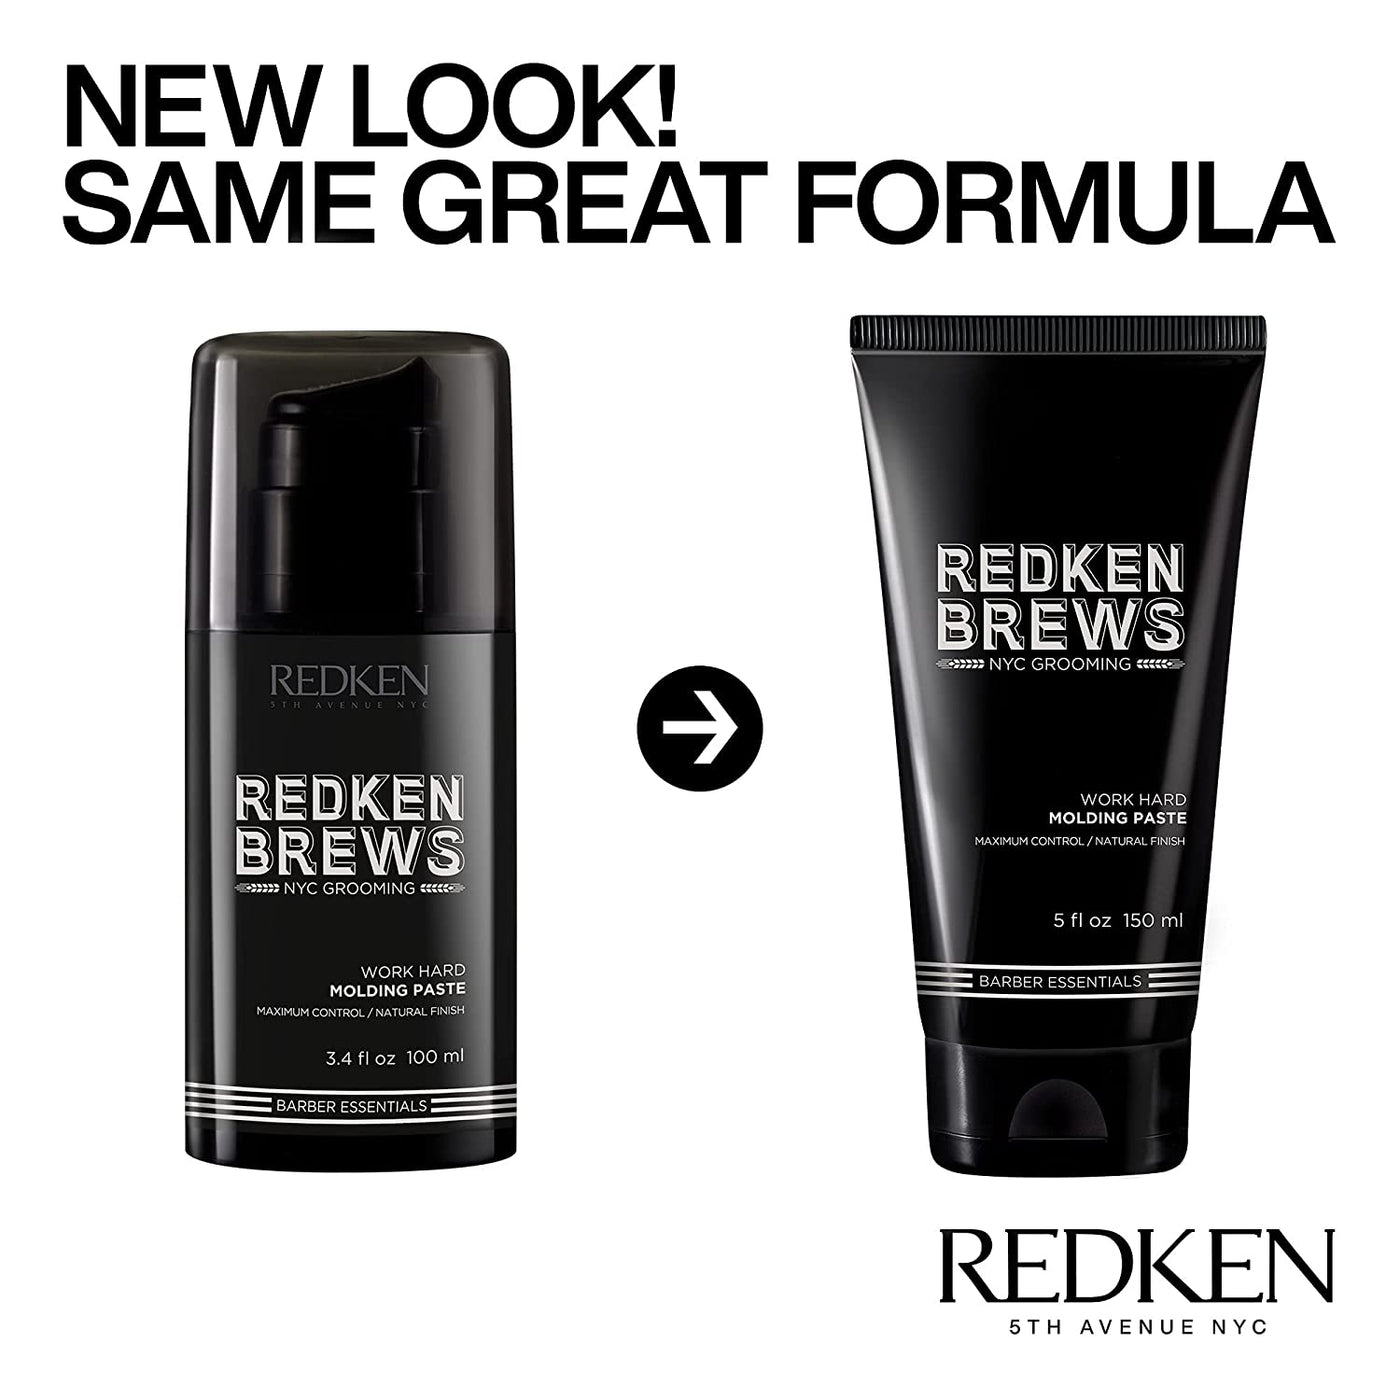 Redken Brews Work Hard Molding Paste (150ml) New look same great formula